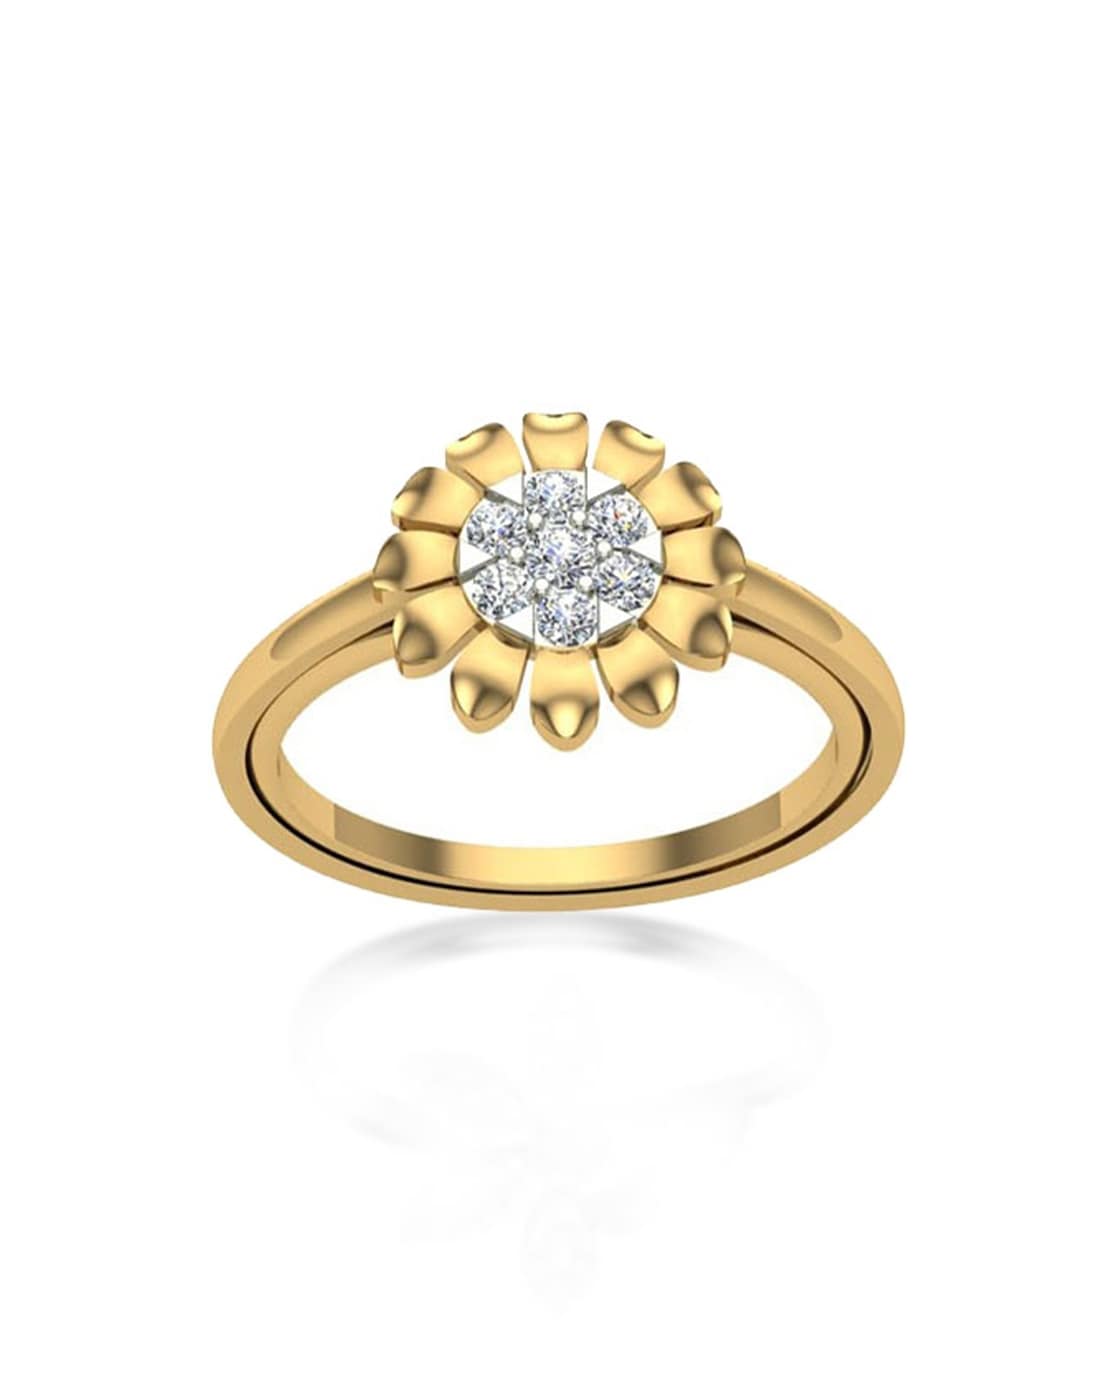 Gold and Diamond Ring | Designer Jewelry justoneeye.com